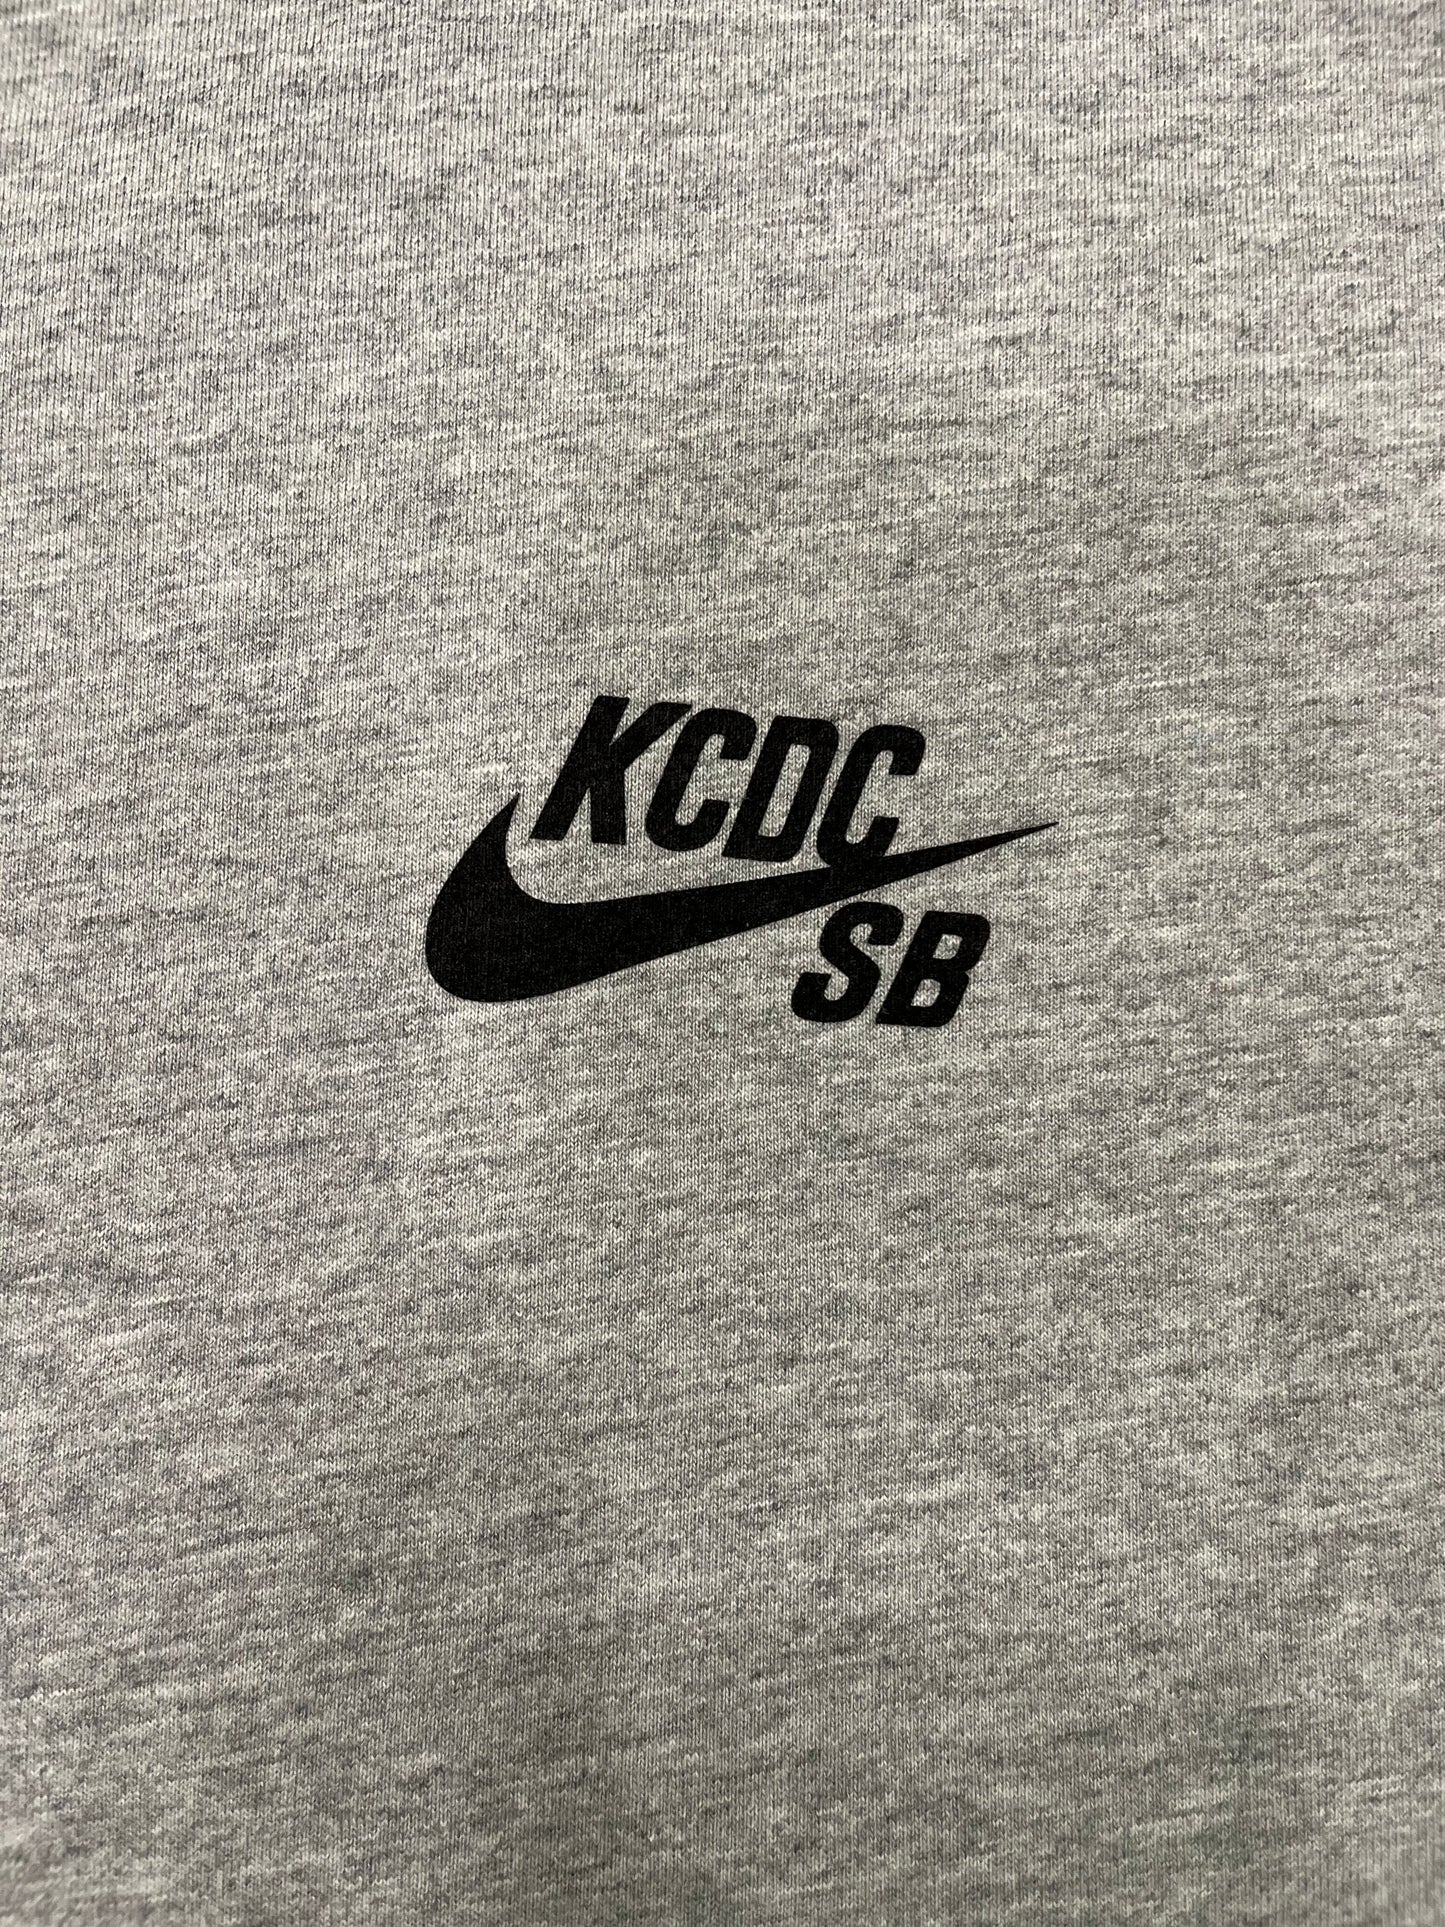 KCDC X Kevin nike SB Bigfoot Tee Grey, T-Shirt - Paroissesaintefoy Sneakers Sale Online